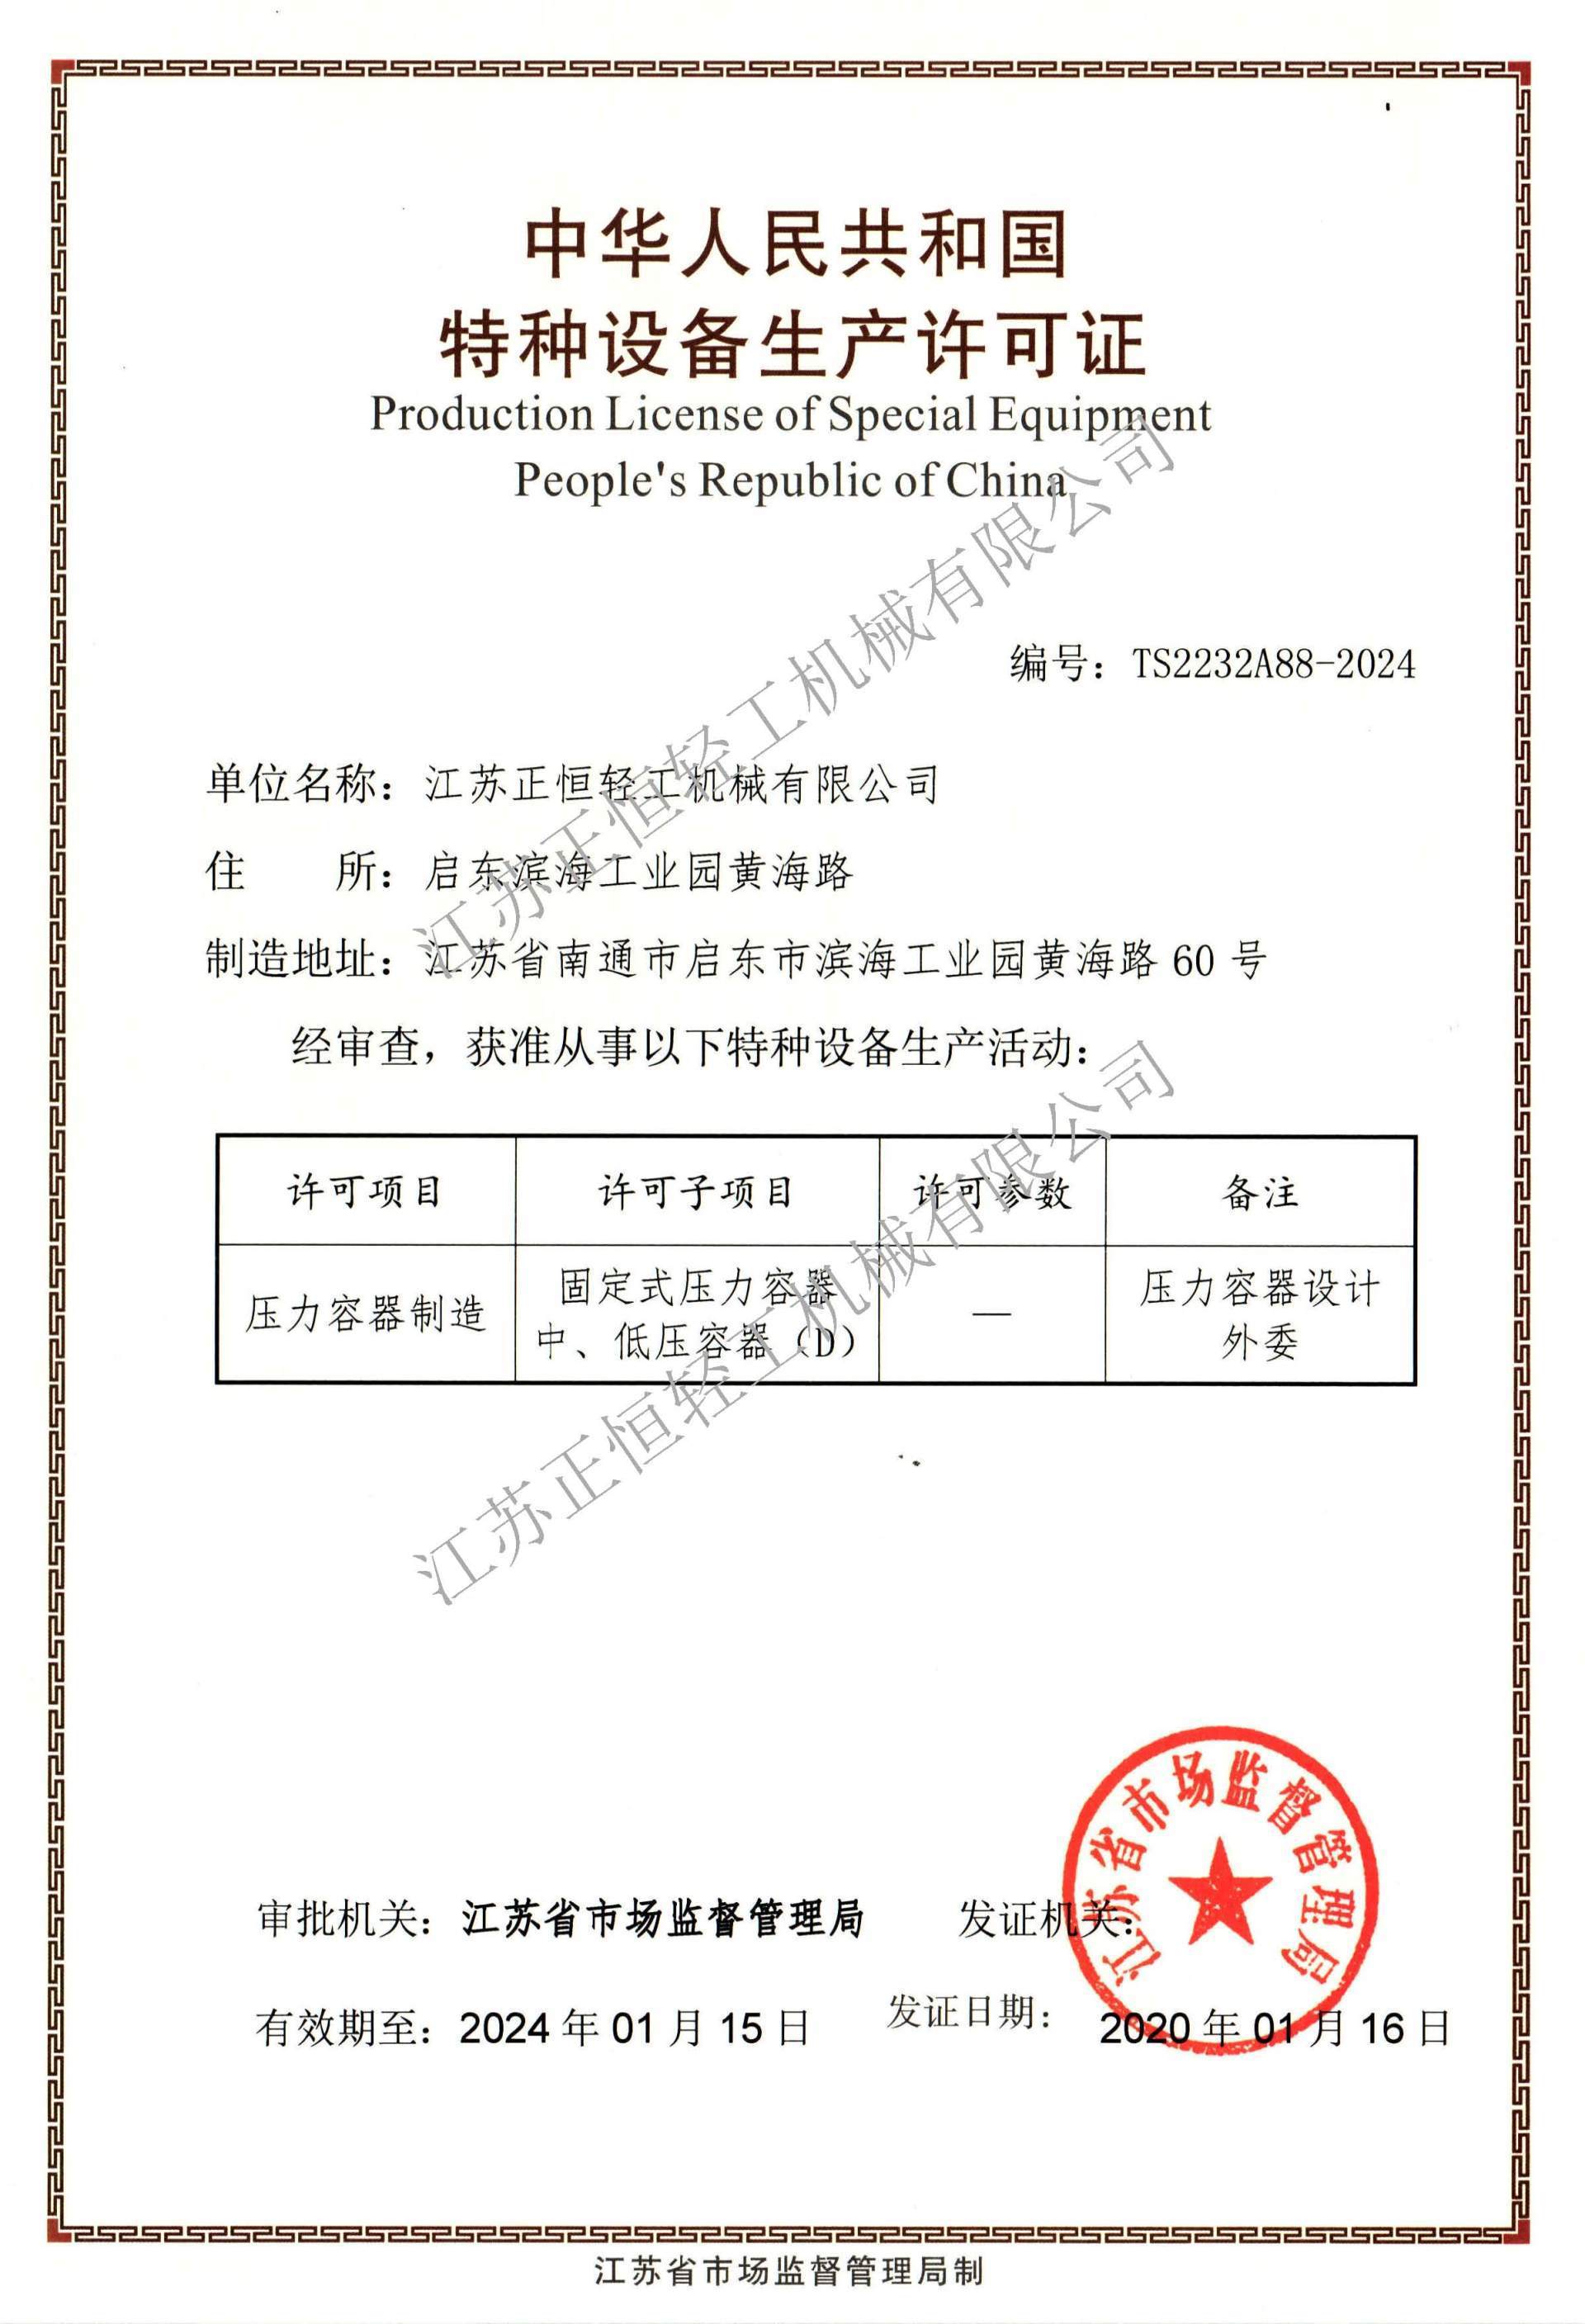 Pressure vessel production license